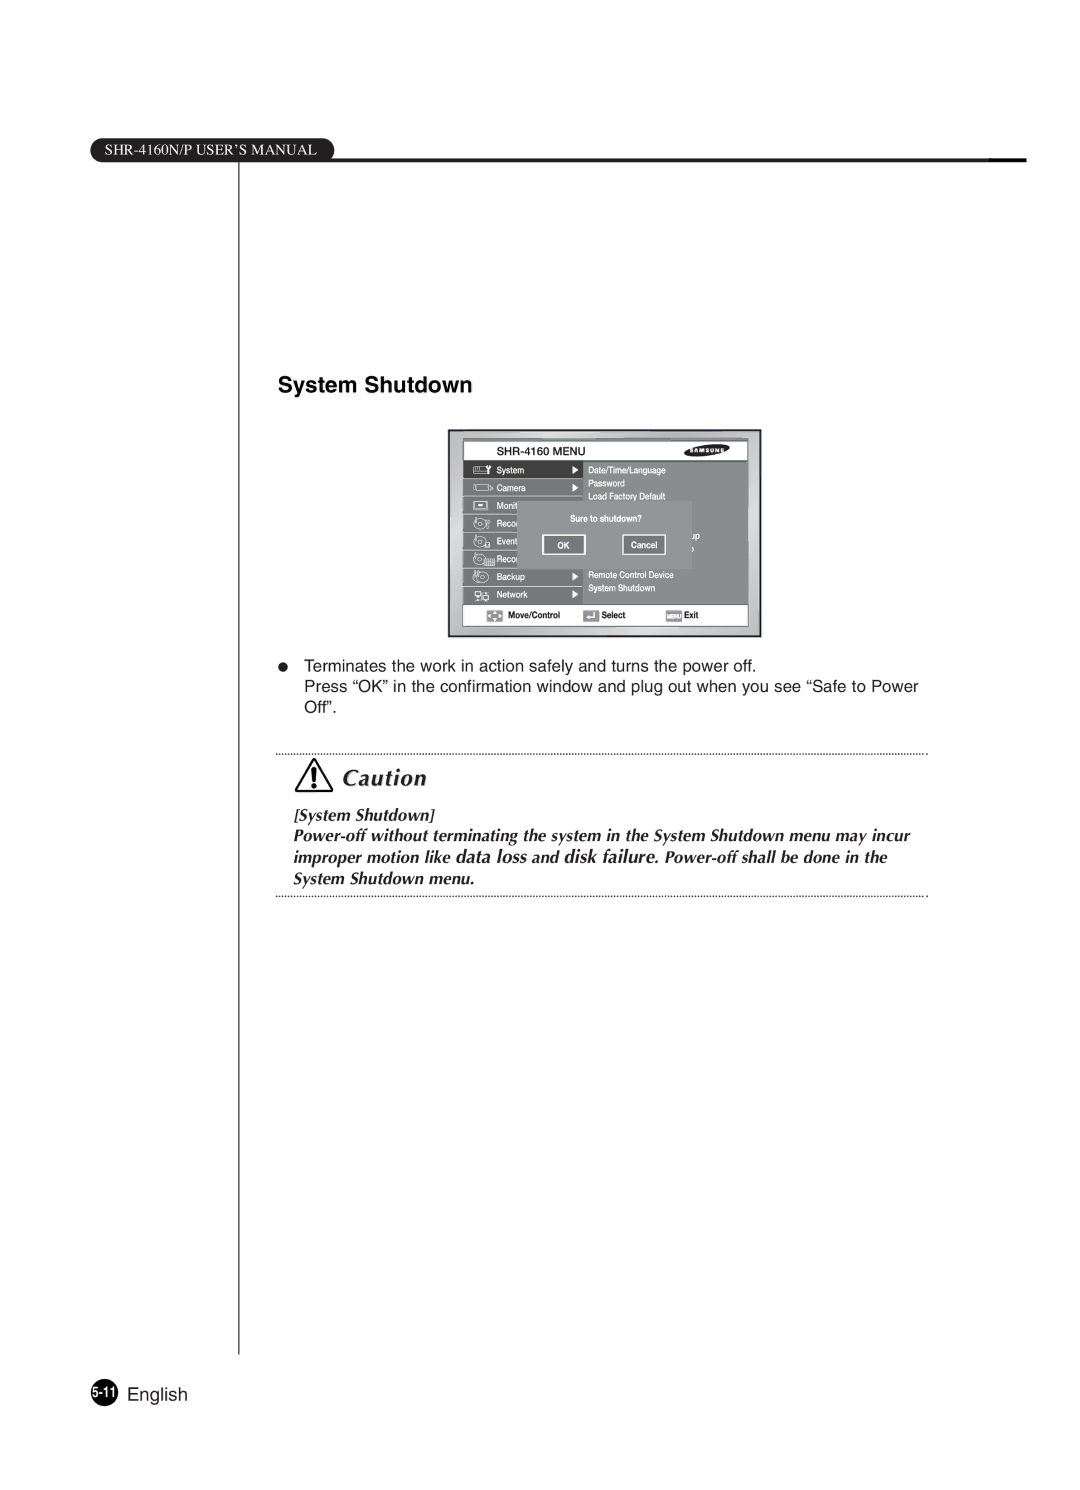 Samsung SHR-4160P manual System Shutdown, 11English 